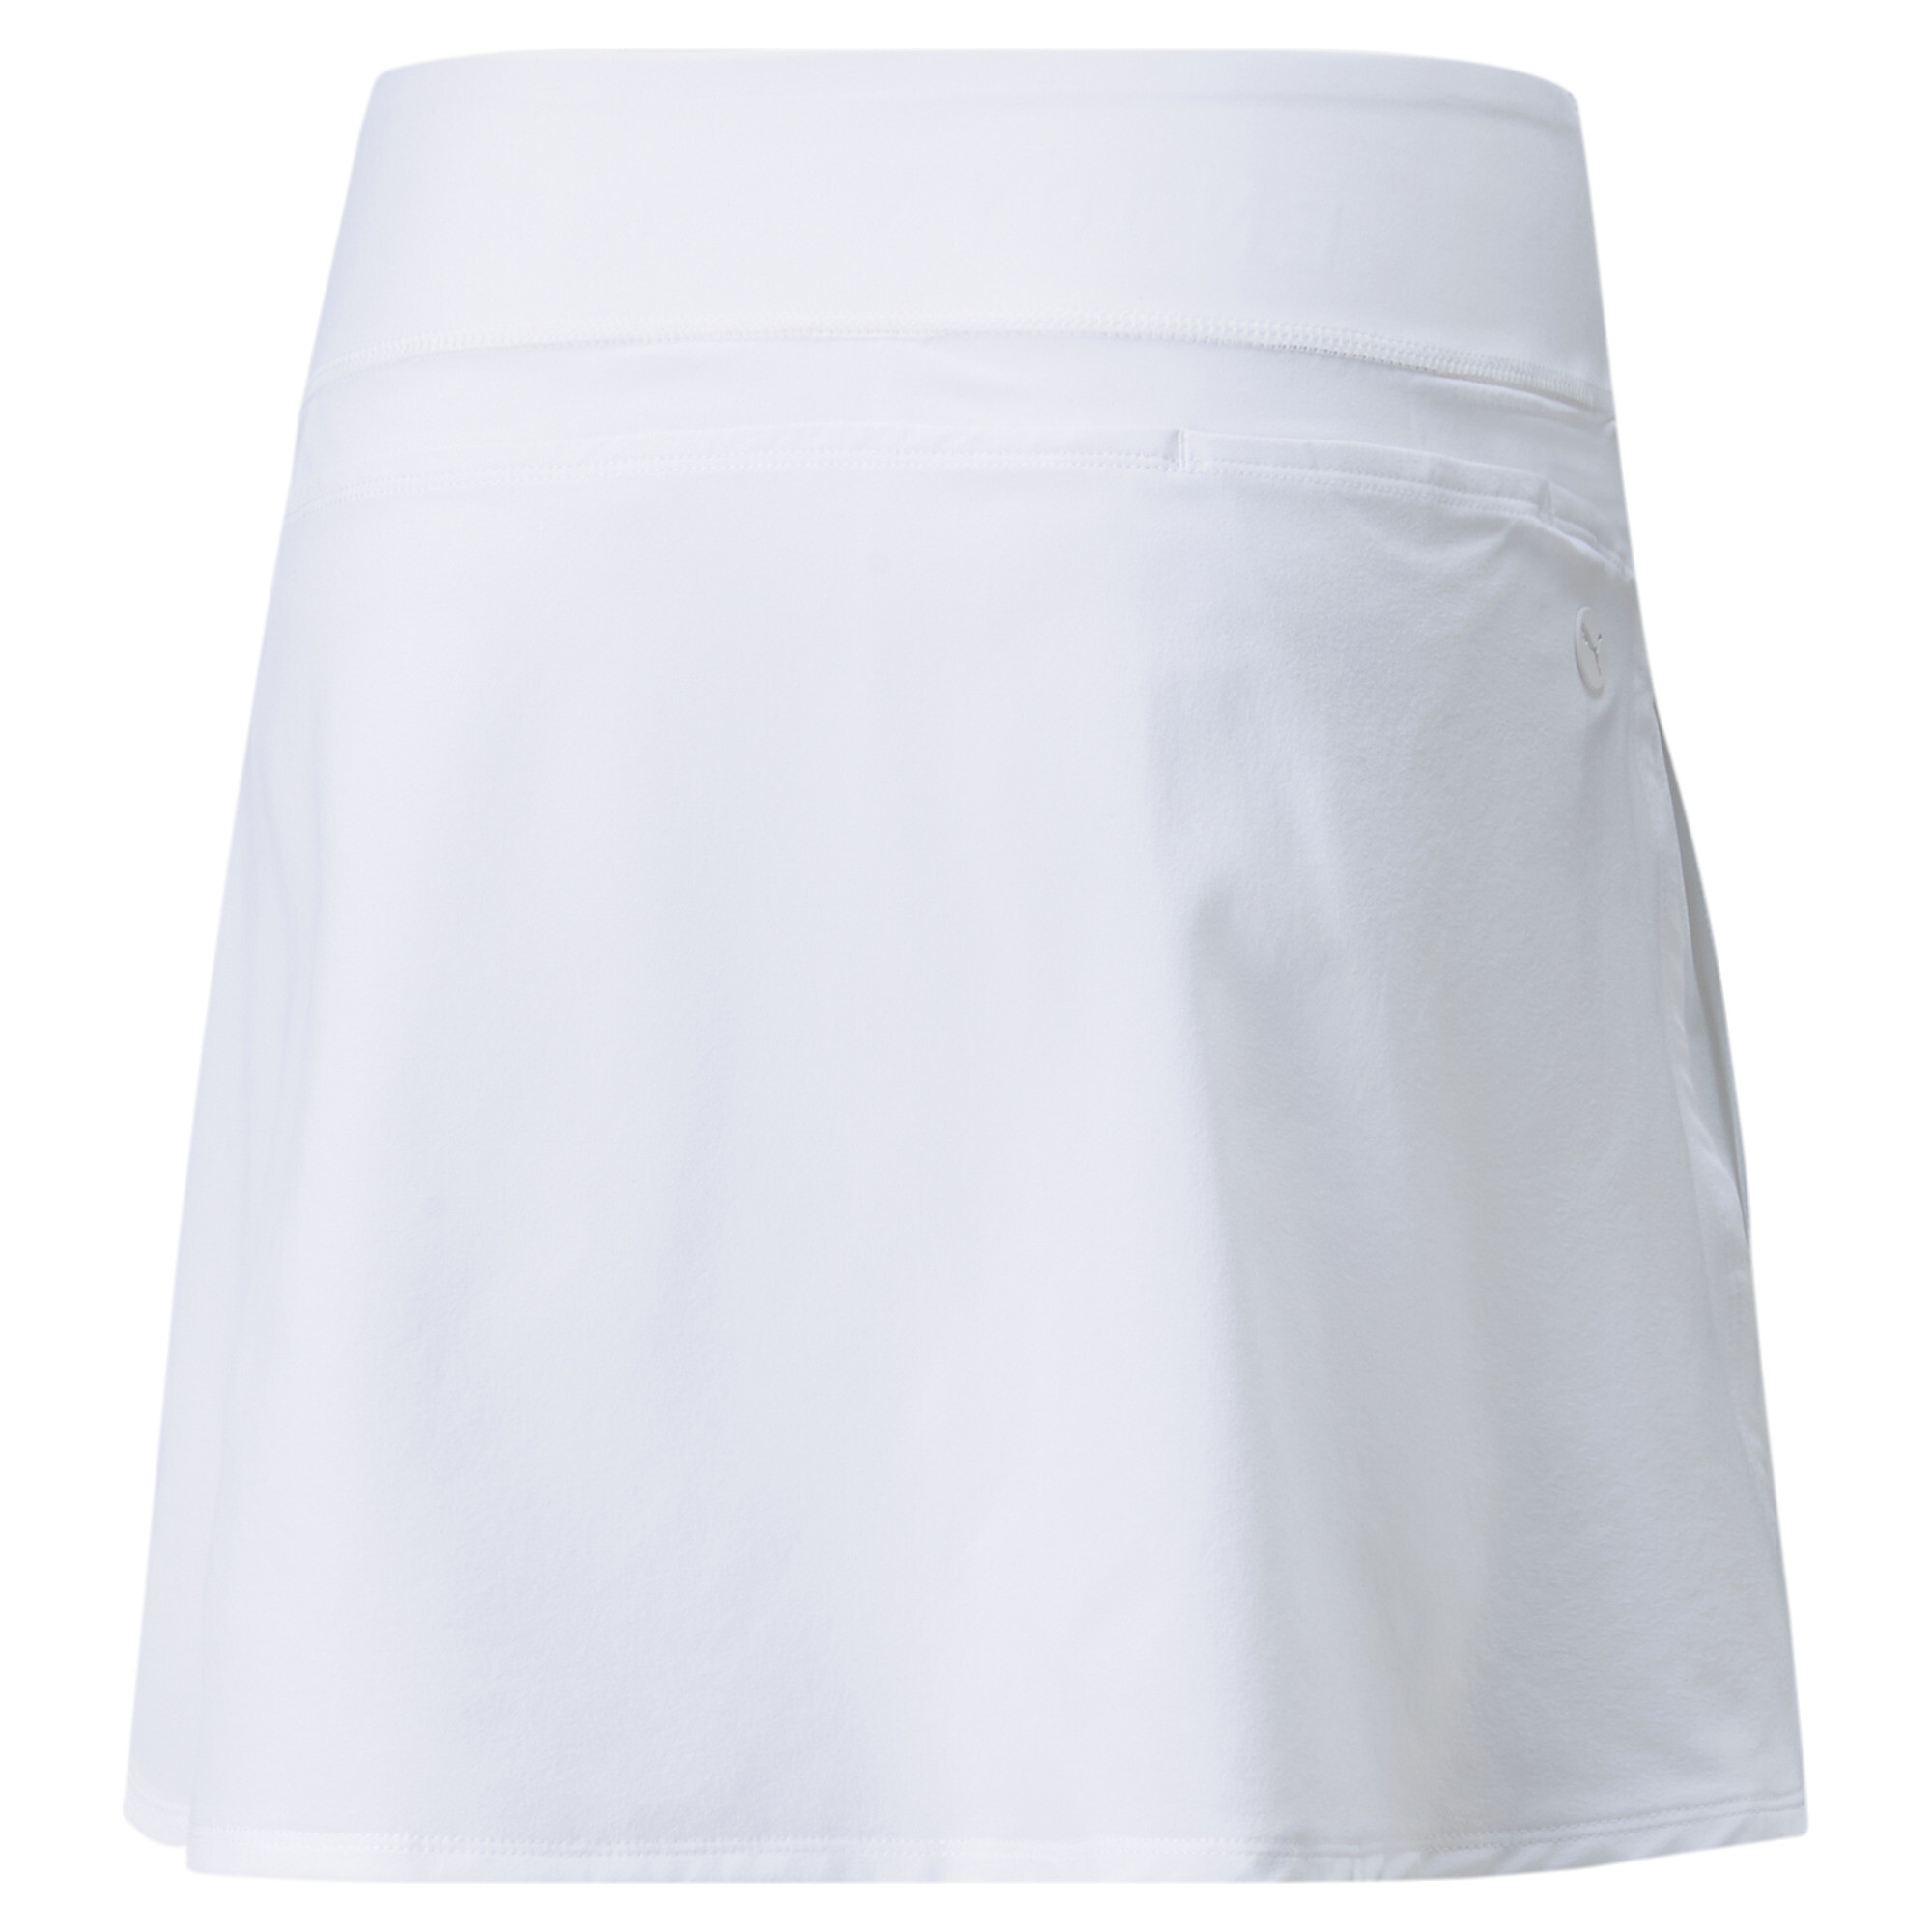 Women's Puma PWRSHAPE Solid's Golf Skirt, White, Size L/L, Clothing